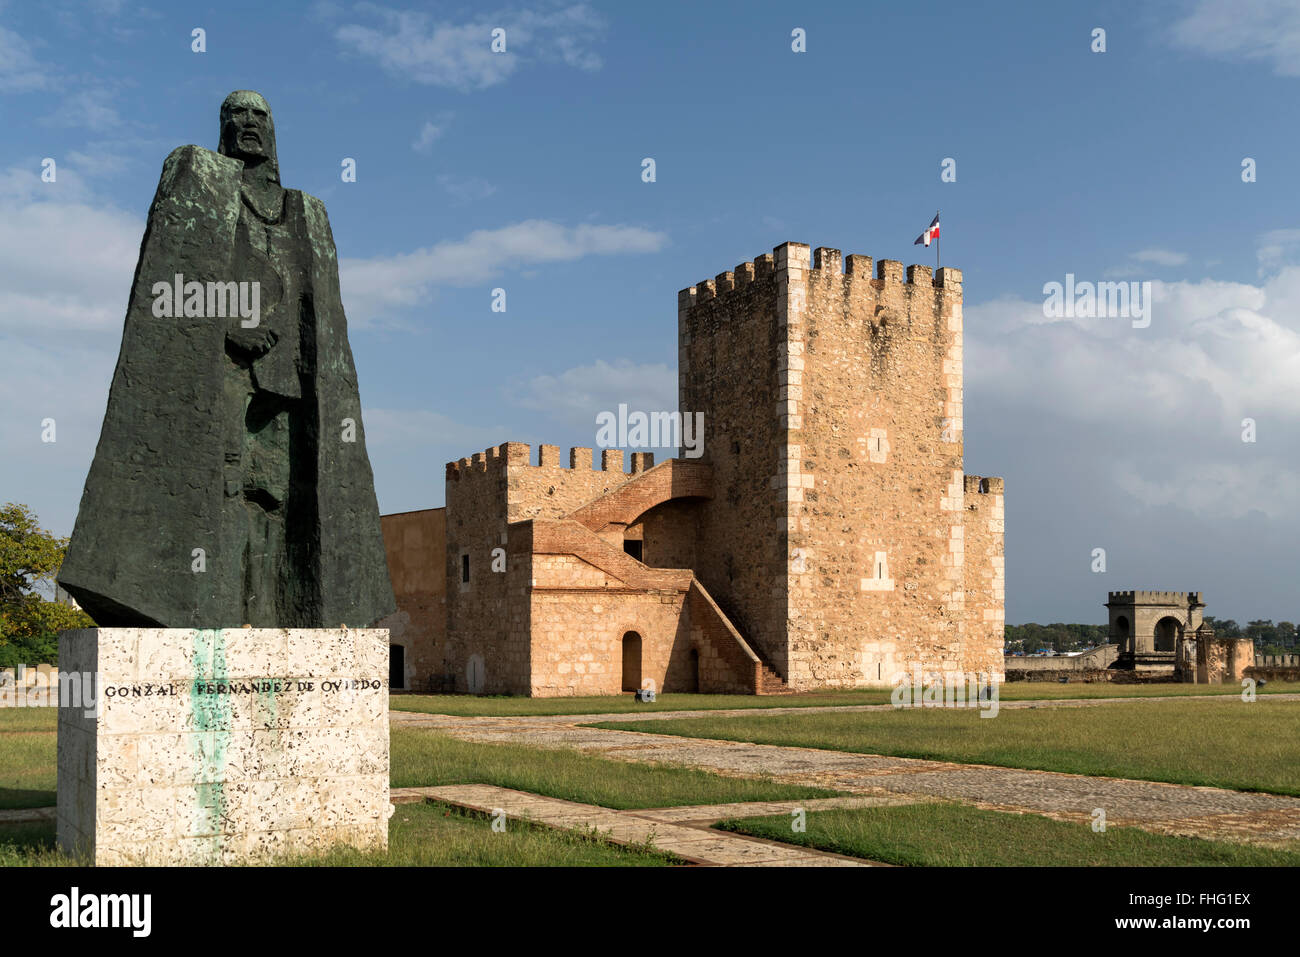 Festung Fortaleza Ozama und Gonzalo Fernández de Oviedo Statue, Hauptstadt Santo Domingo, Dominikanische Republik, Karibik, Amerika, Stockfoto